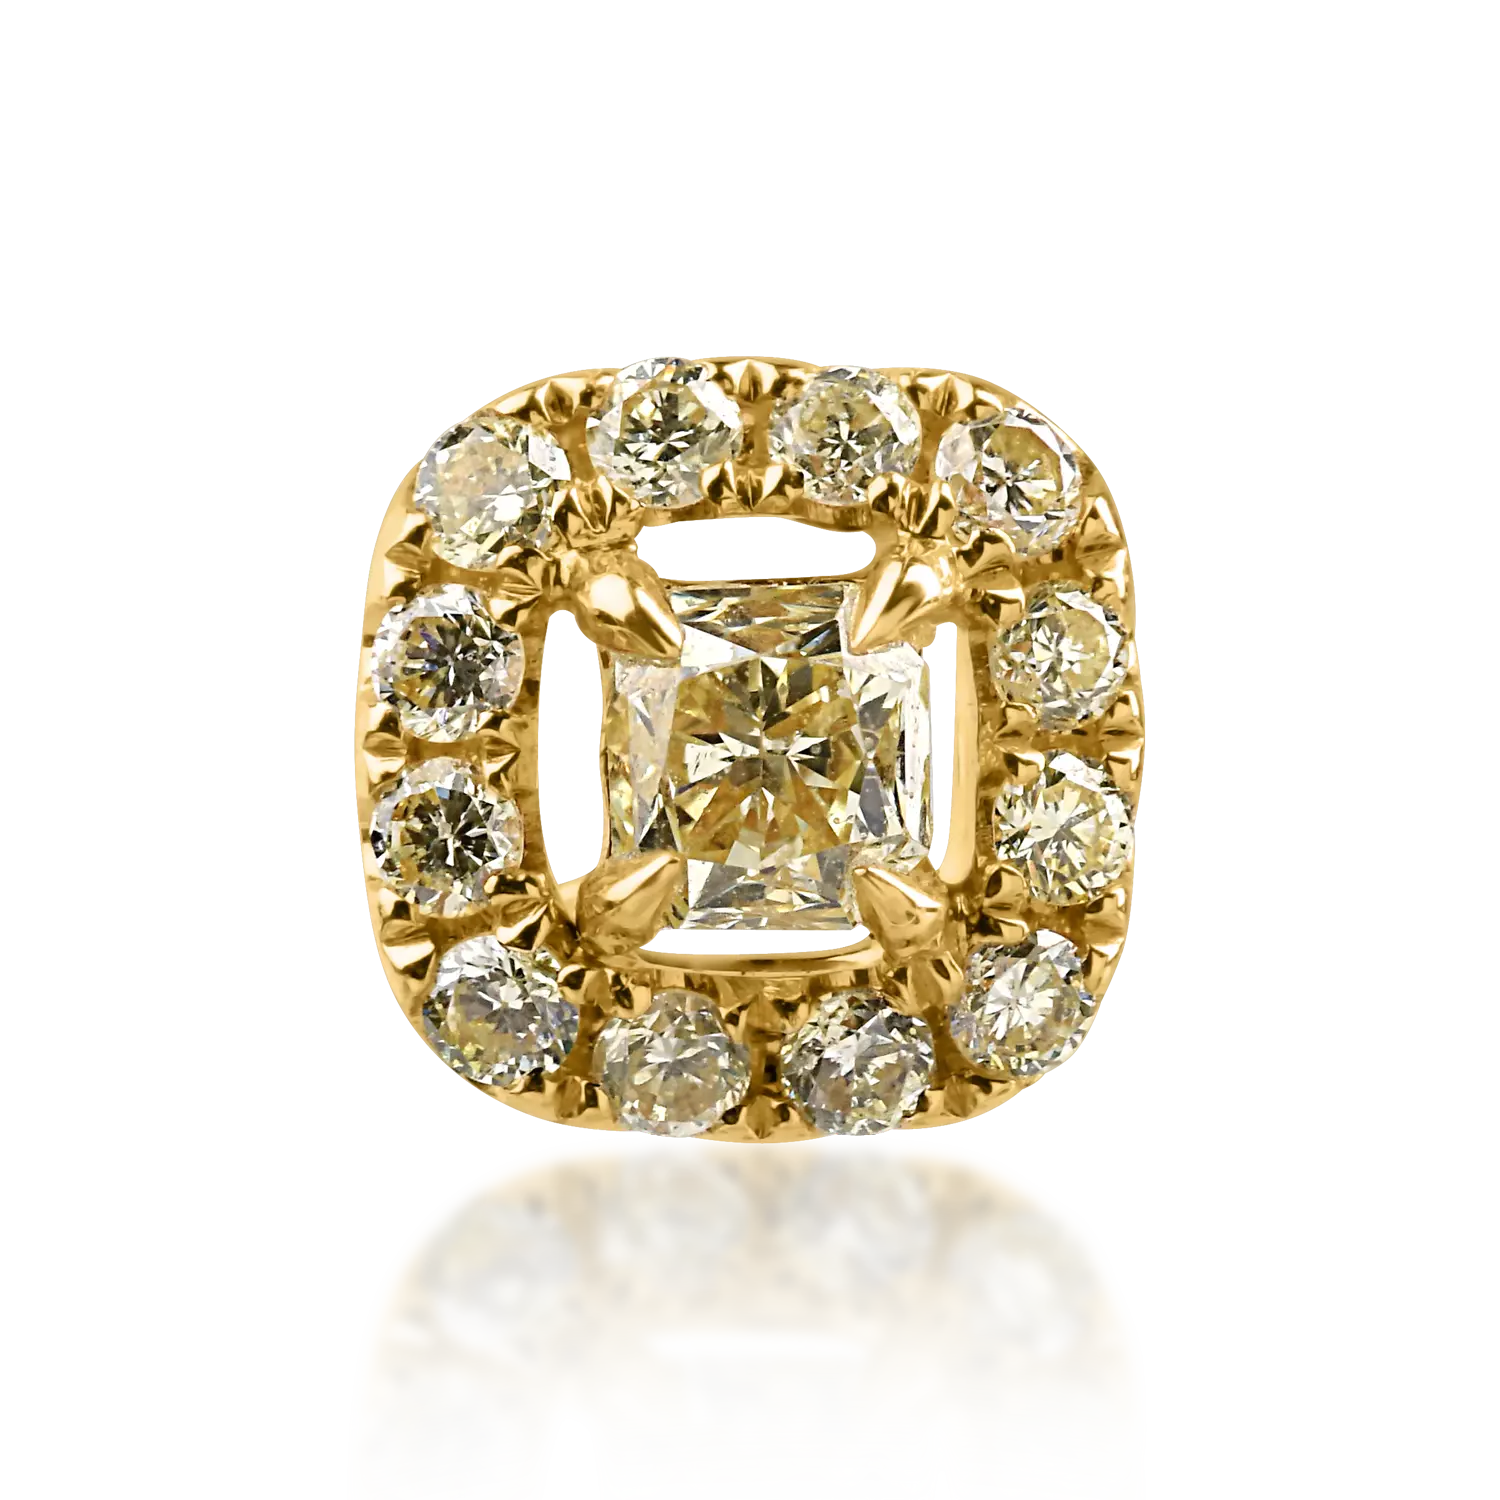 Pandantiv din aur galben cu diamant fancy-galben de 0.113ct si diamante galbene de 0.066ct